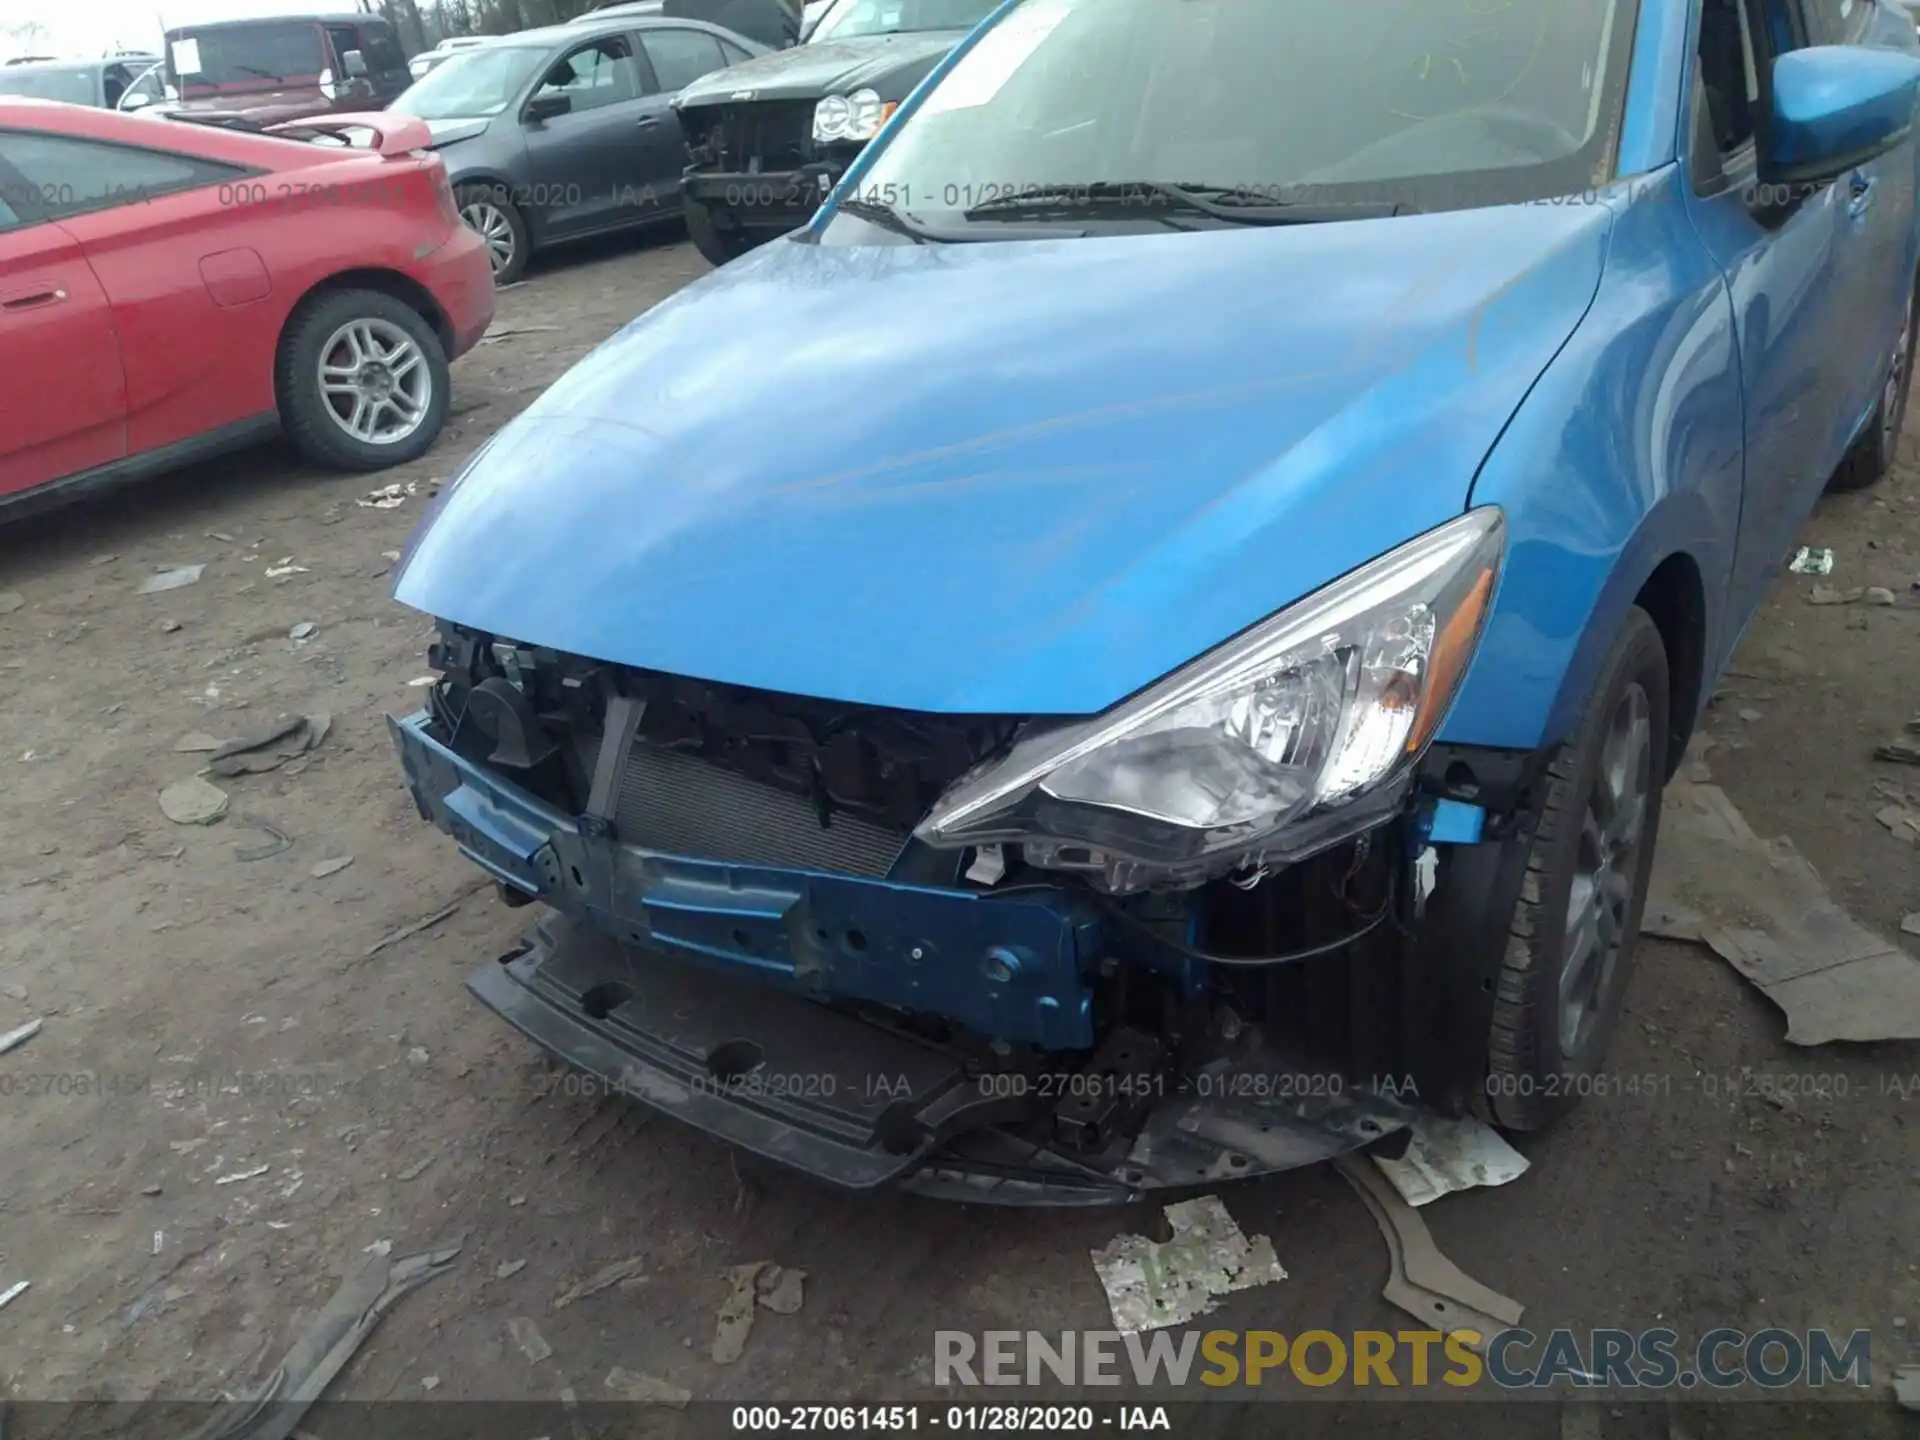 6 Фотография поврежденного автомобиля 3MYDLBJV1LY700622 TOYOTA YARIS 2020